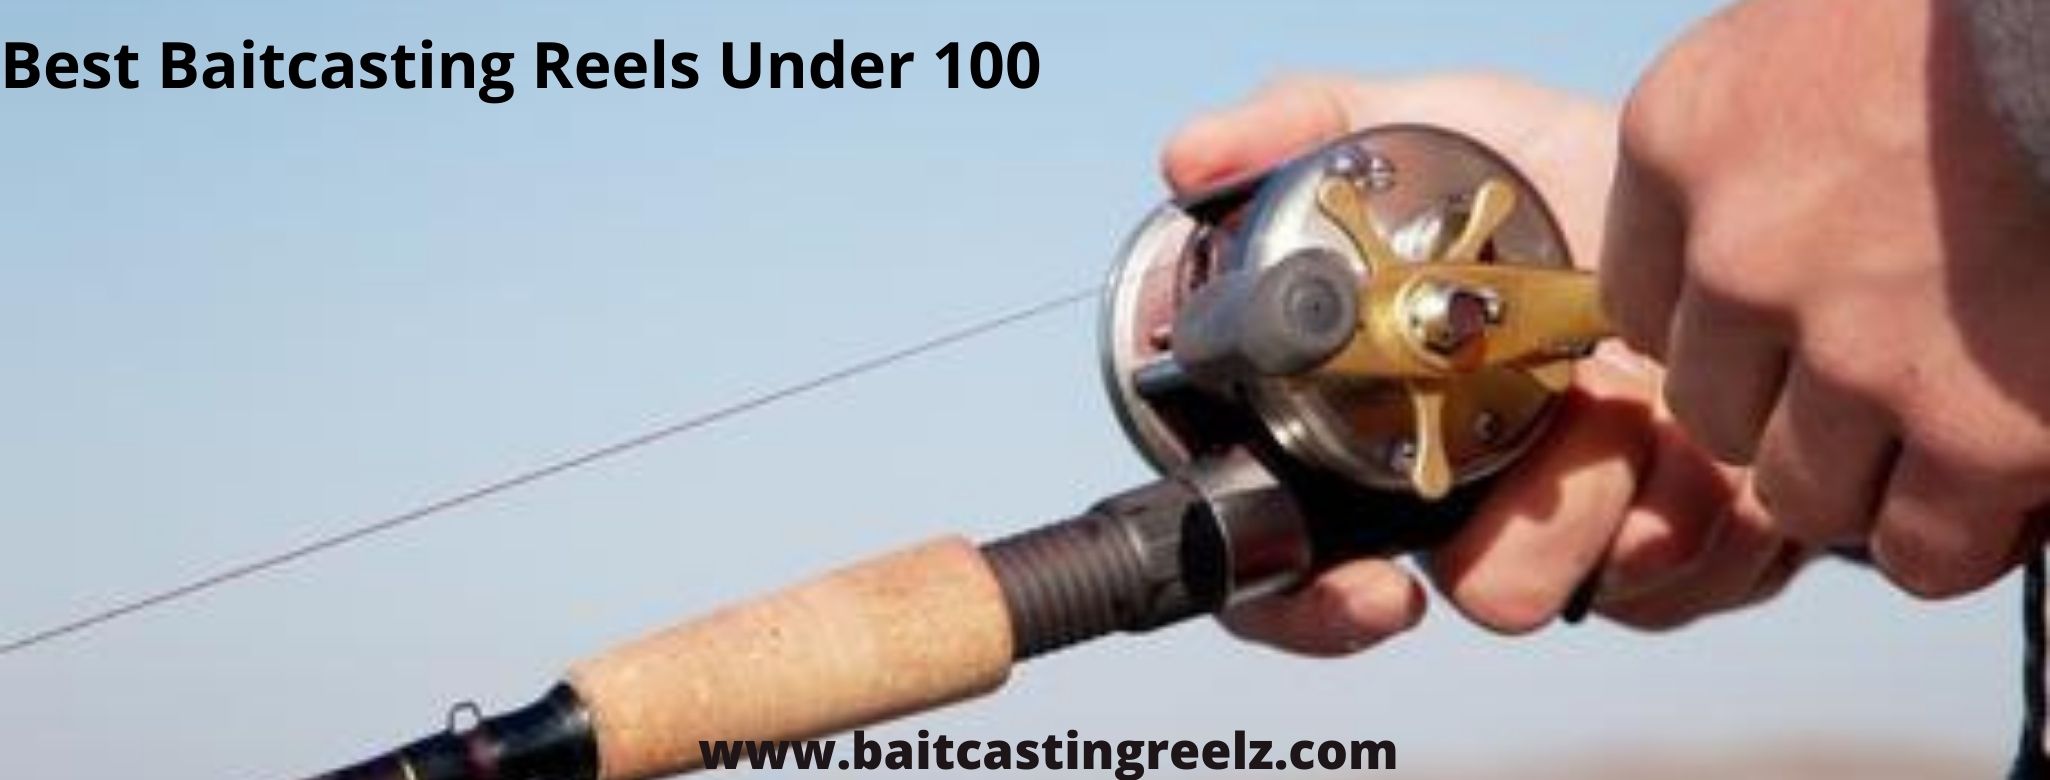 best baitcasting reels under 100